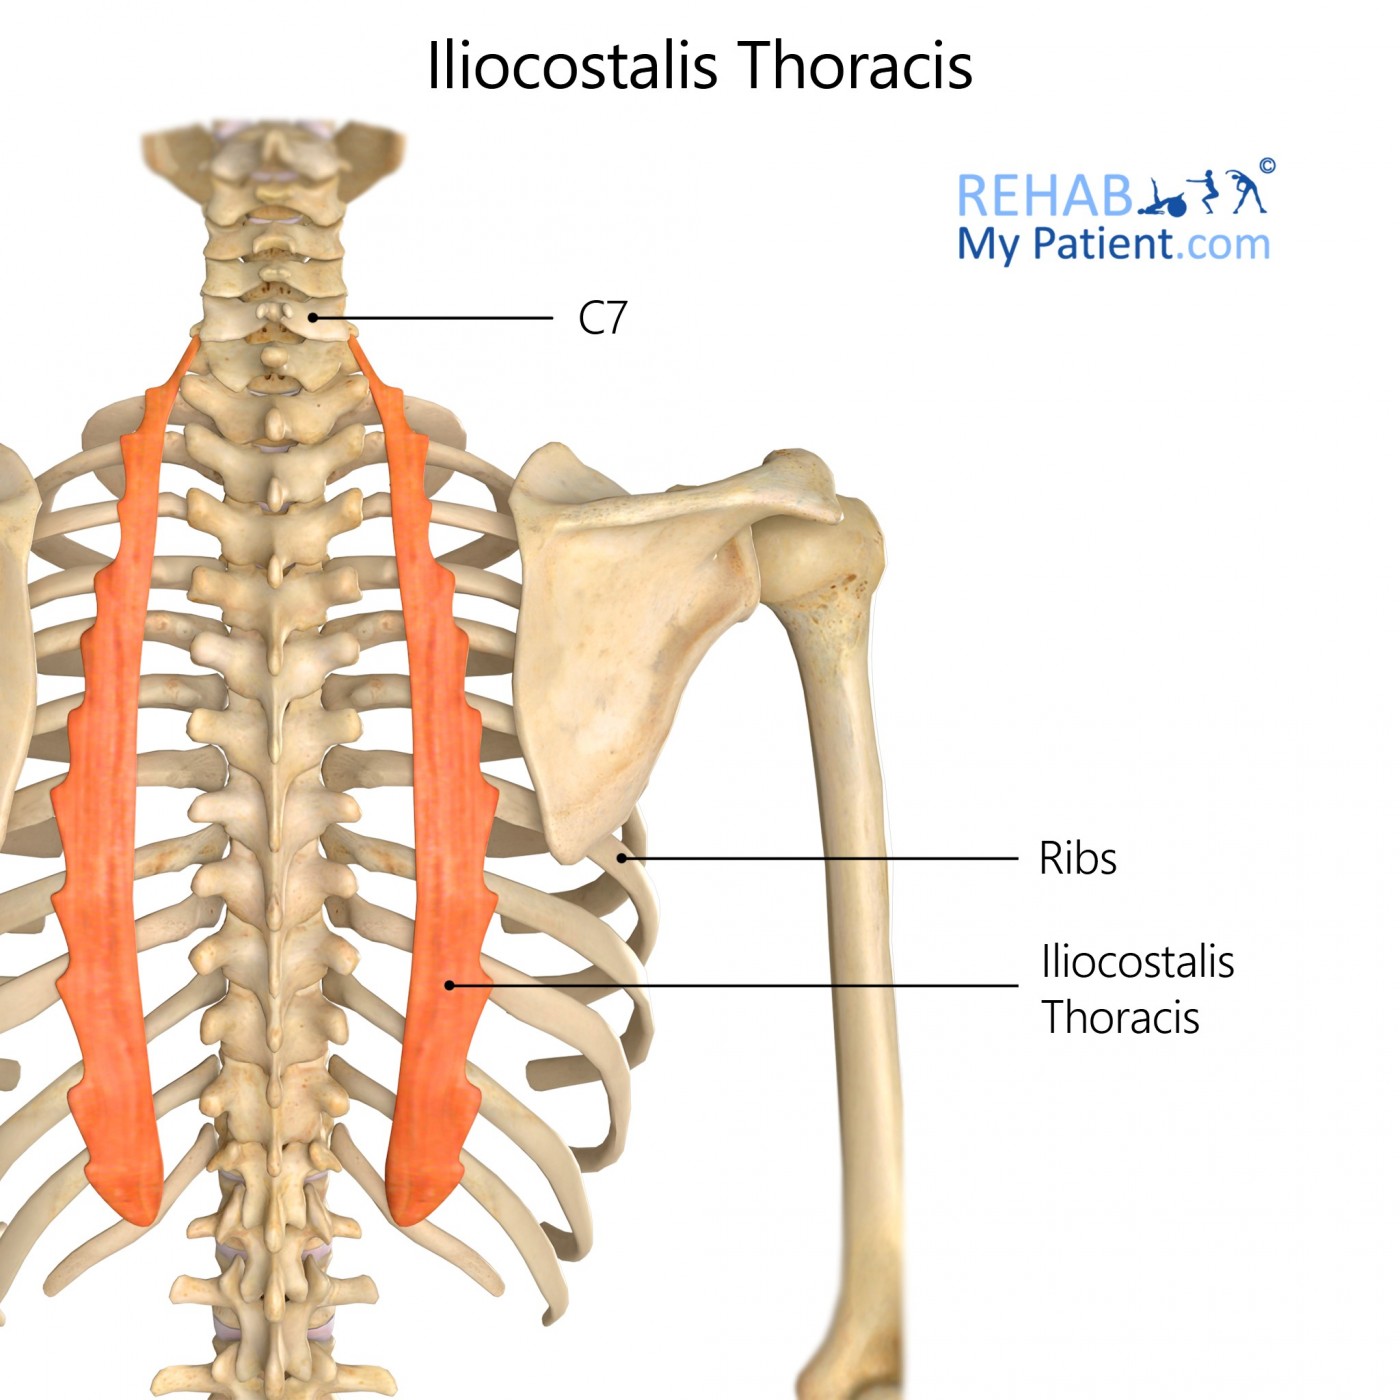 Iliocostalis Thoracis